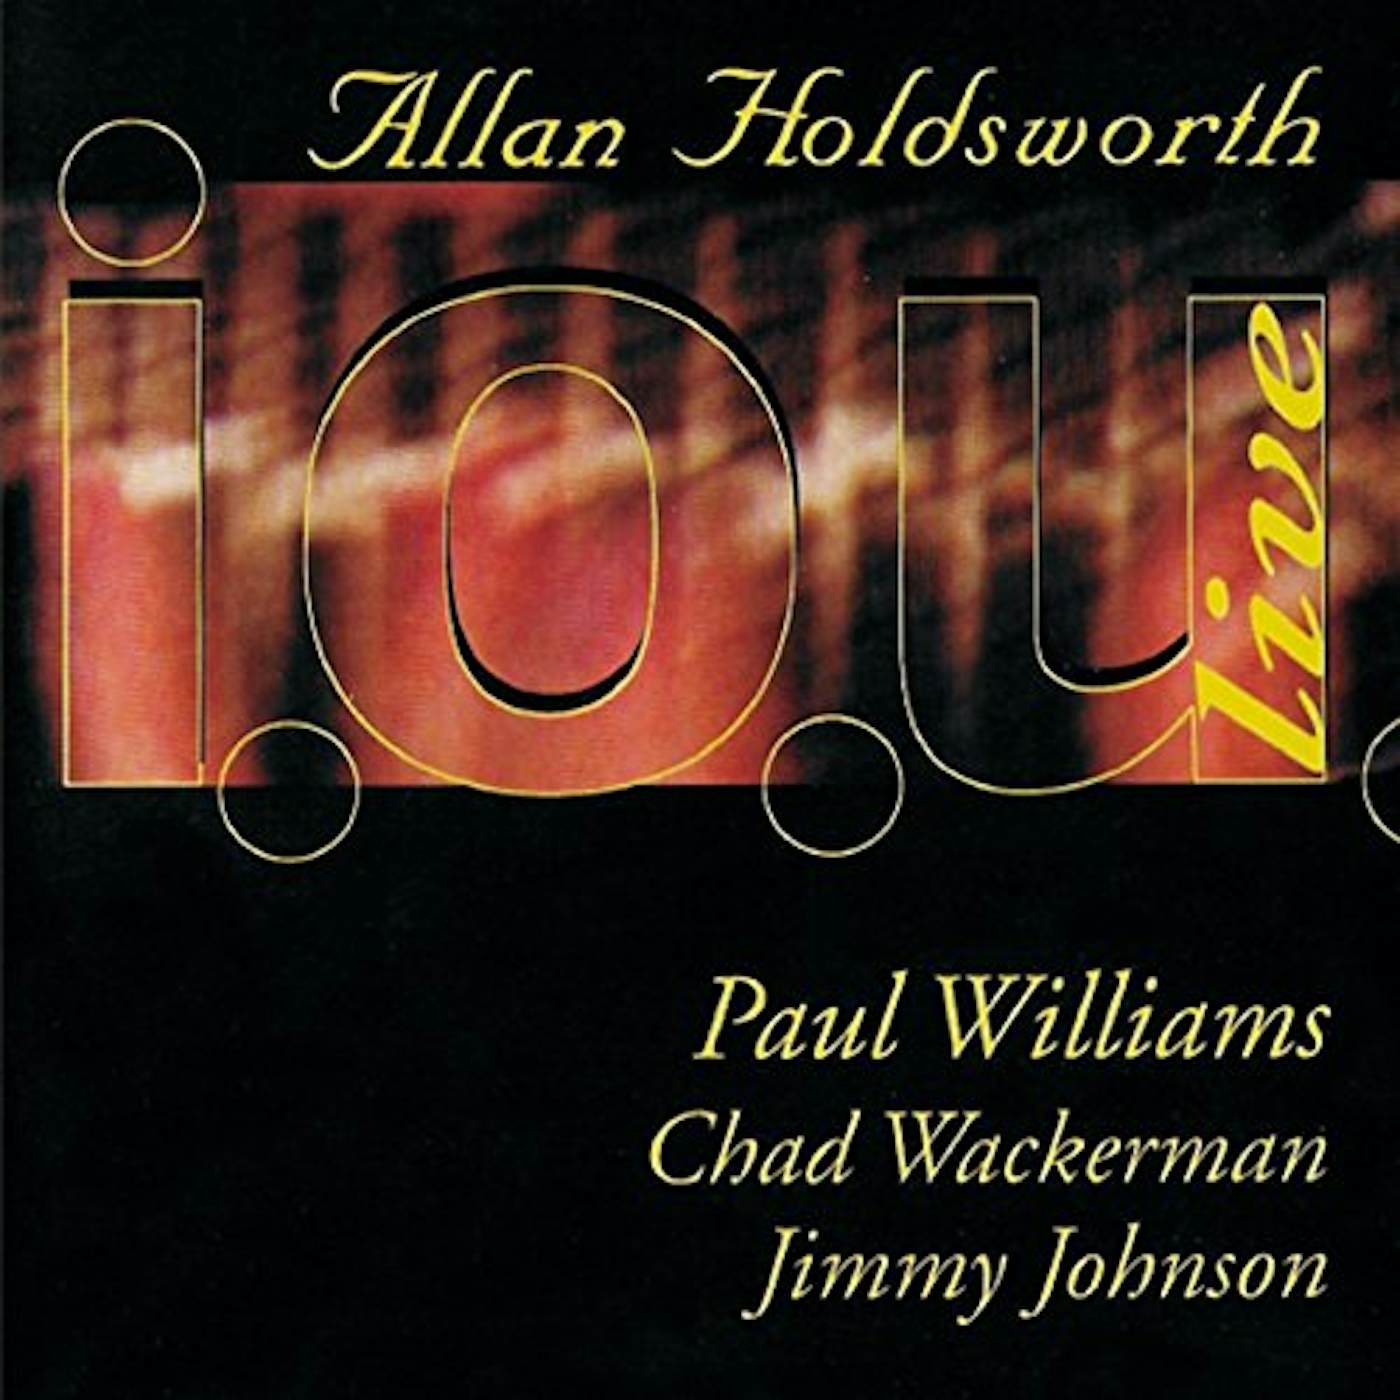 Allan Holdsworth I.O.U. LIVE 1984 CD